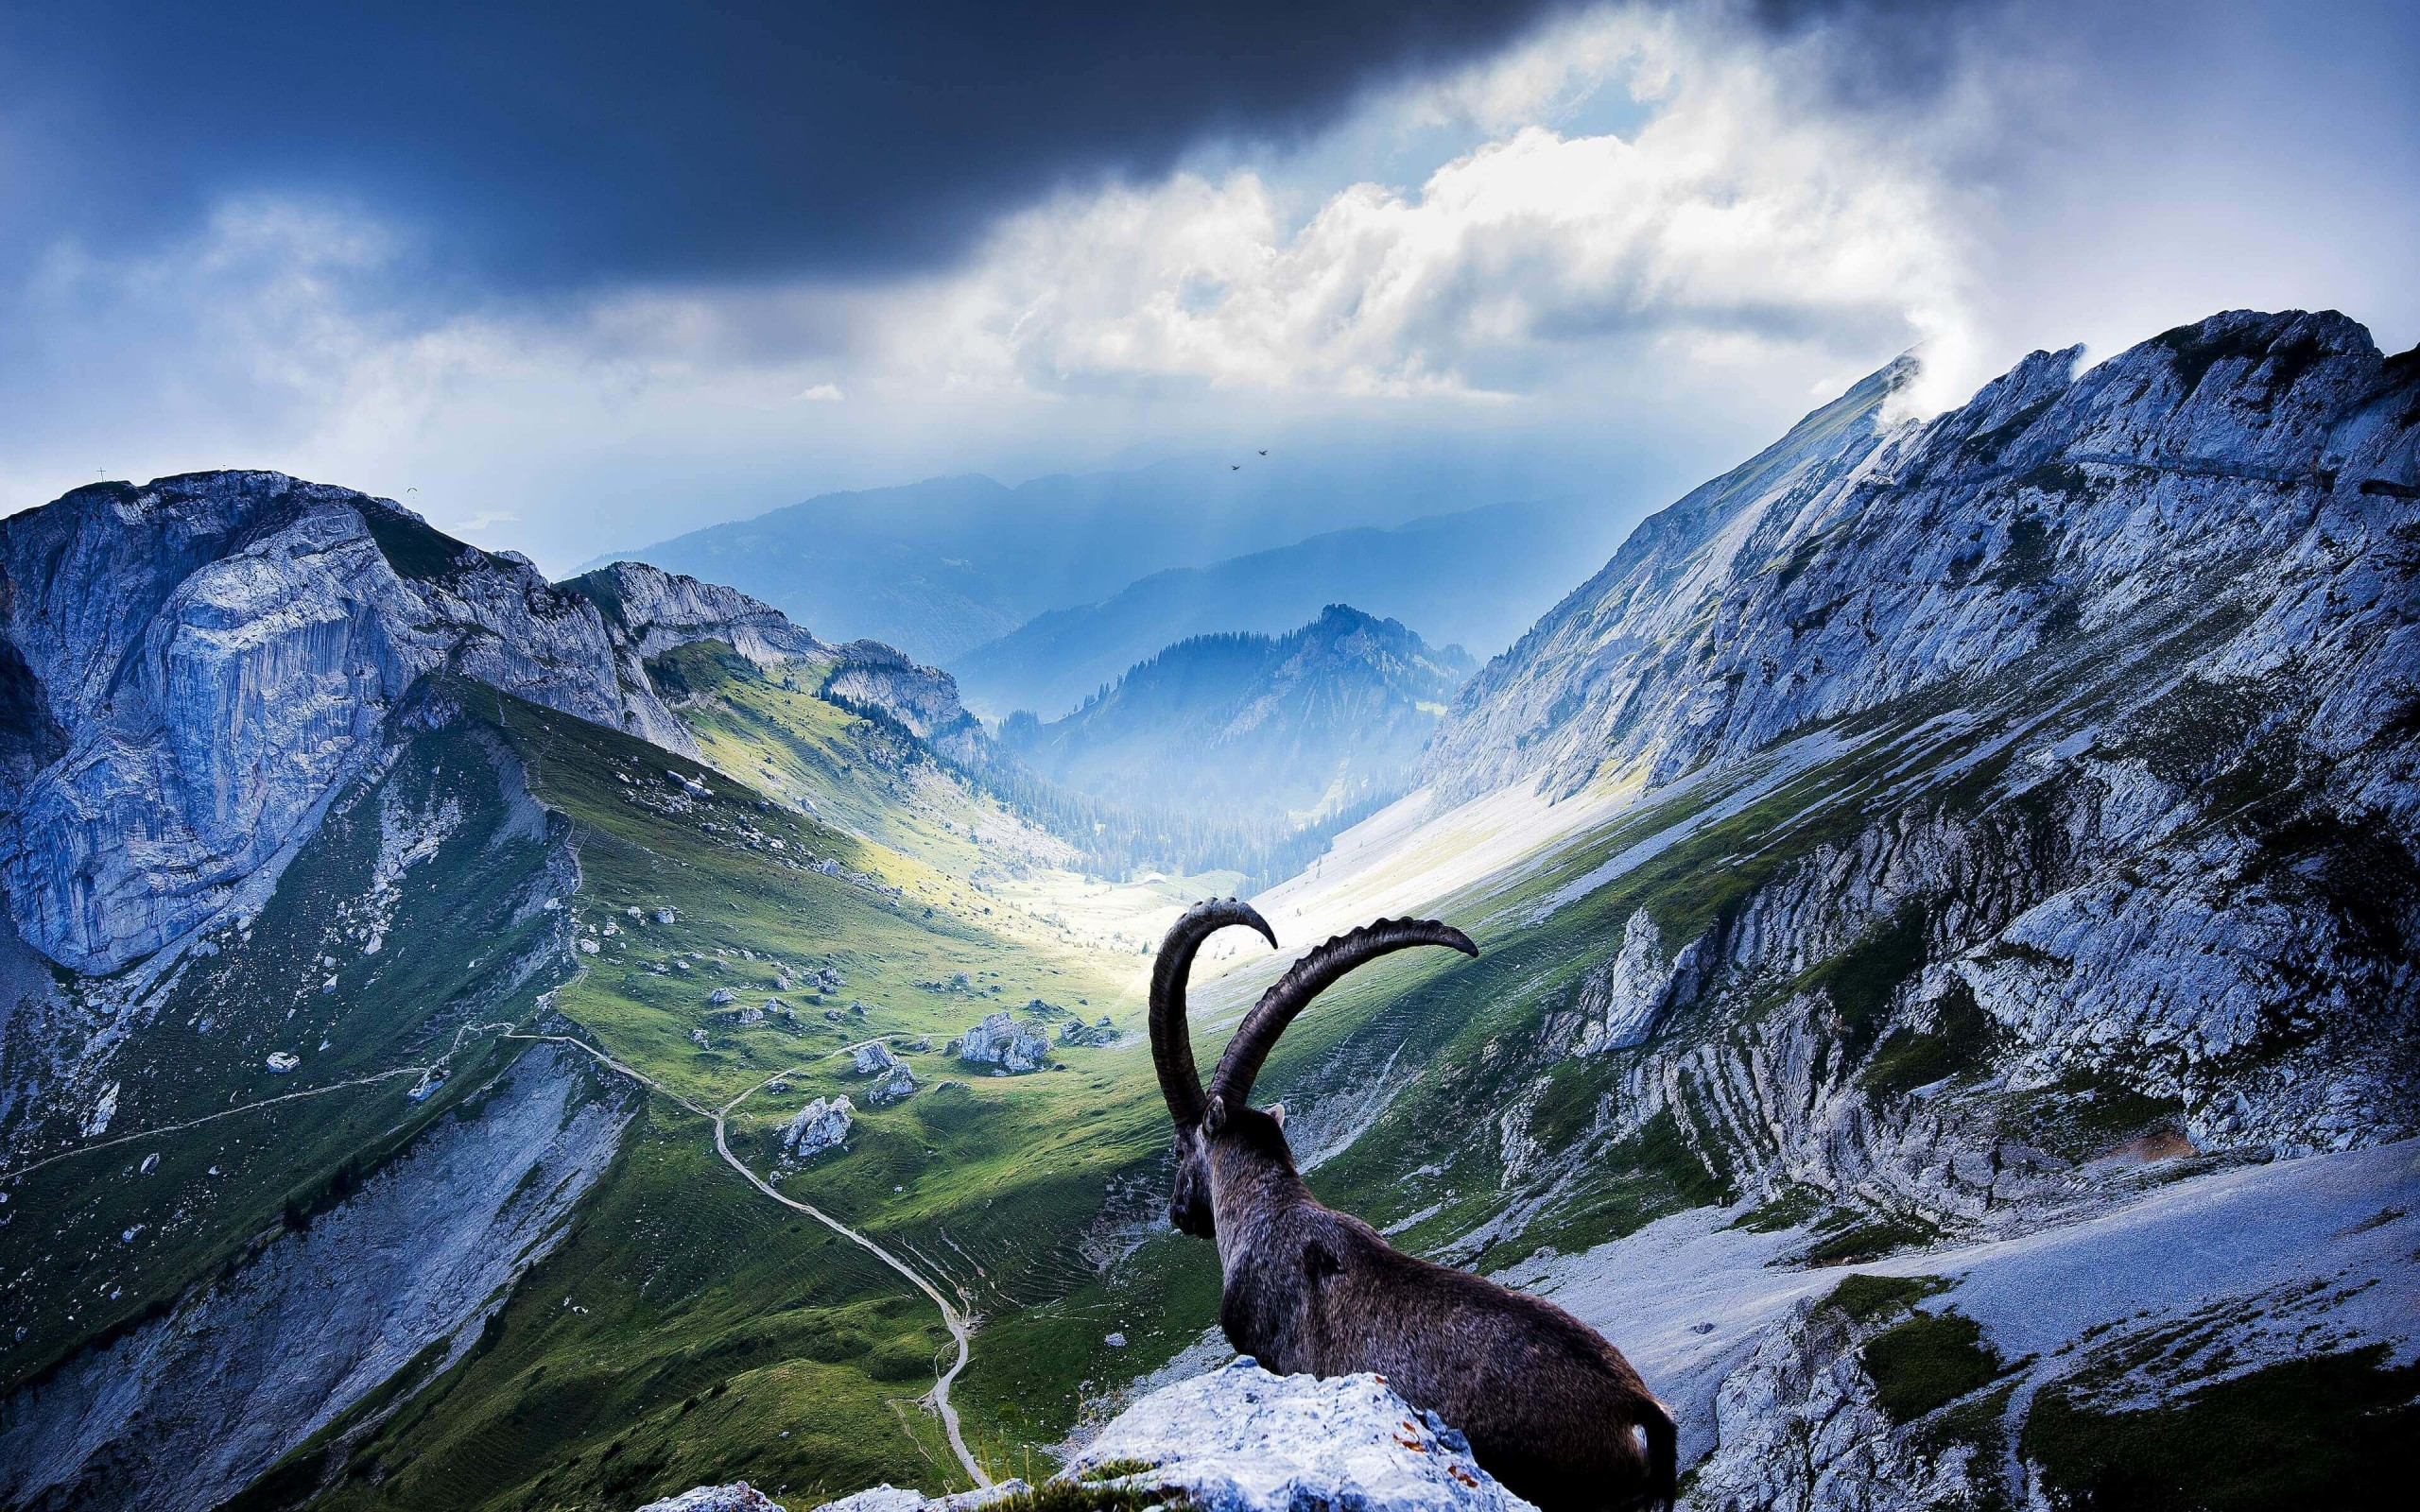 Goat at Pilatus, Switzerland Wallpaper for Desktop 2560x1600